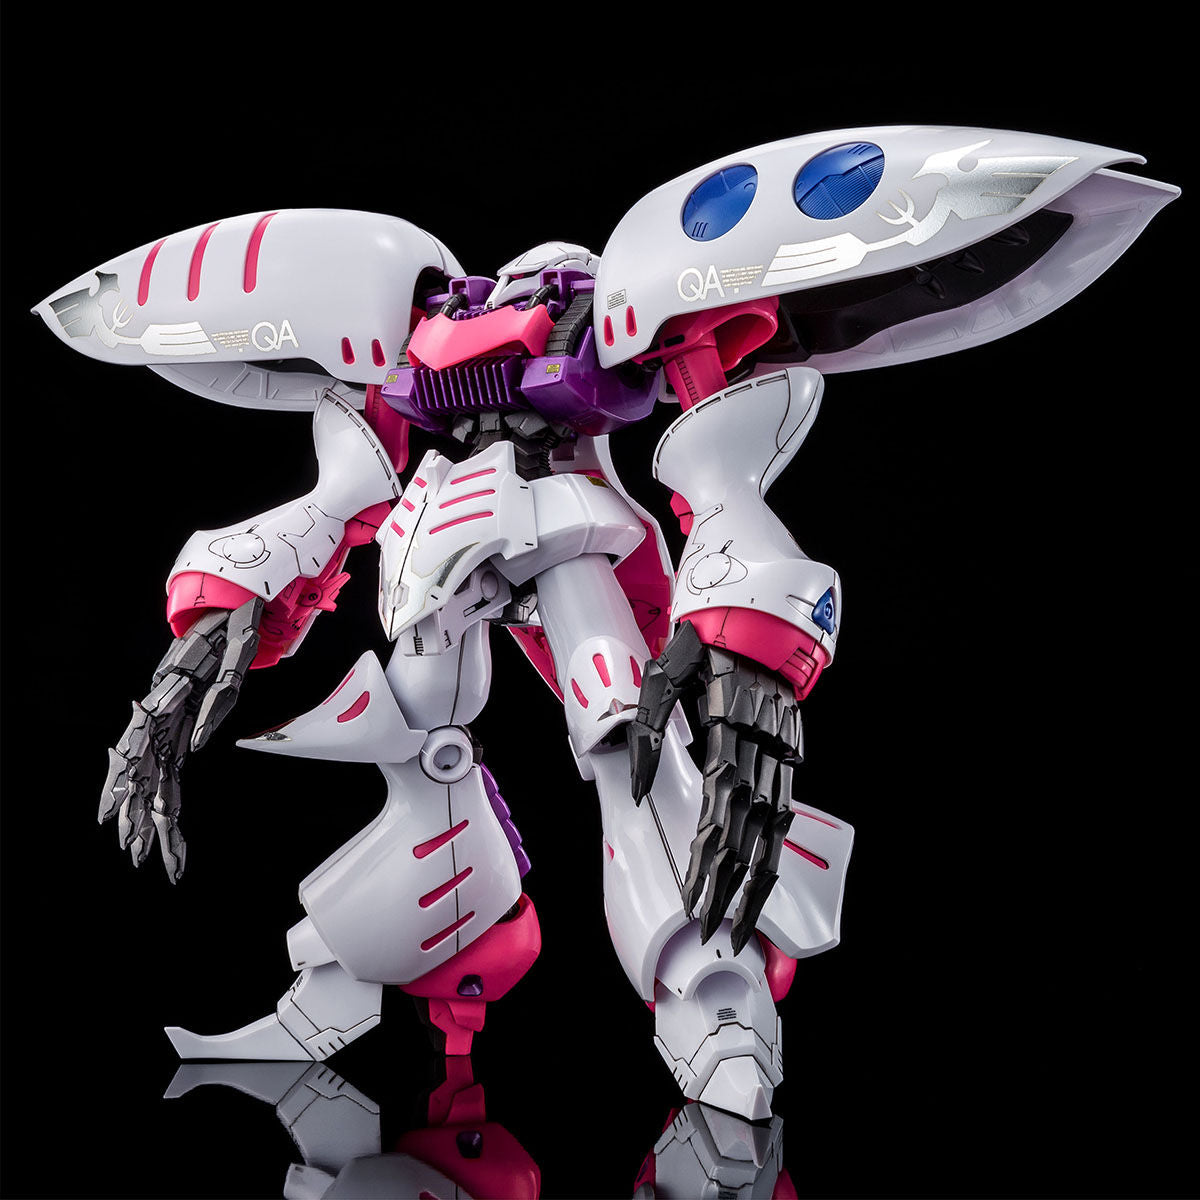 *Preorder* MG Gundam Qubeley Amberil - P-Bandai 1/100 - Udgives slut august - Modtages September - gundam-store.dk